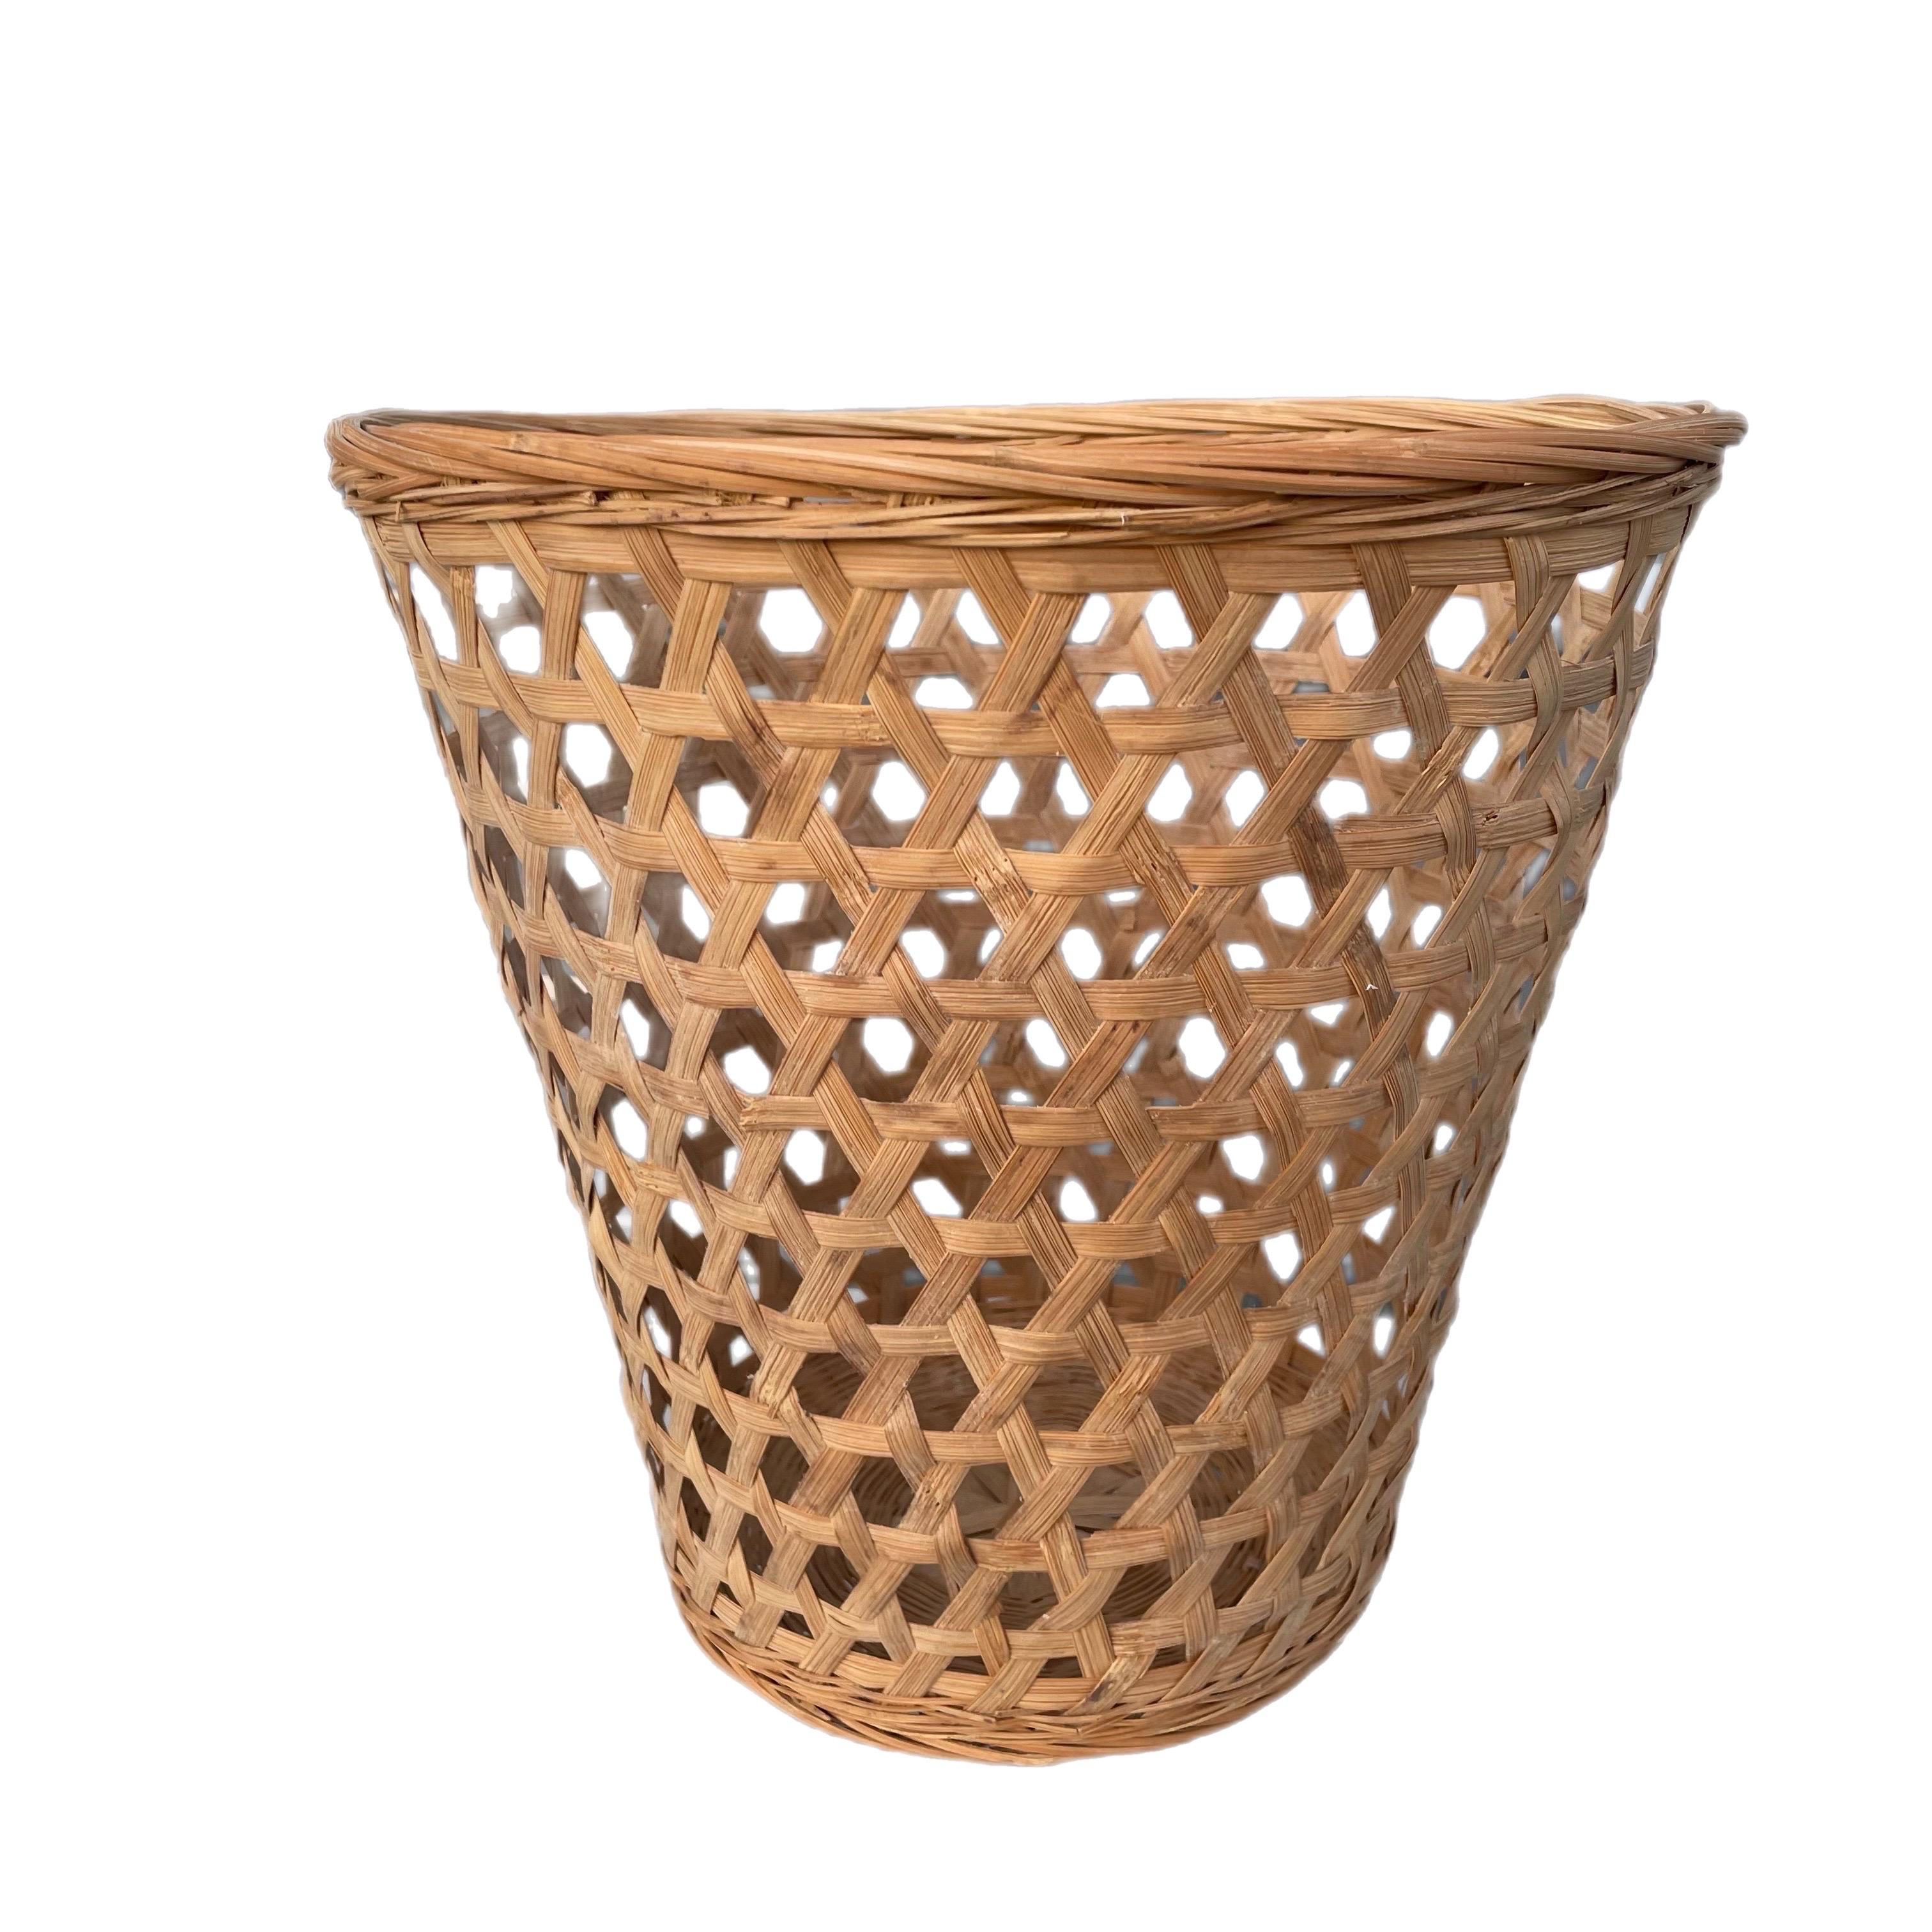 Hand-Woven 20th Century Open Weave Wicker Wastebasket or Trash Can